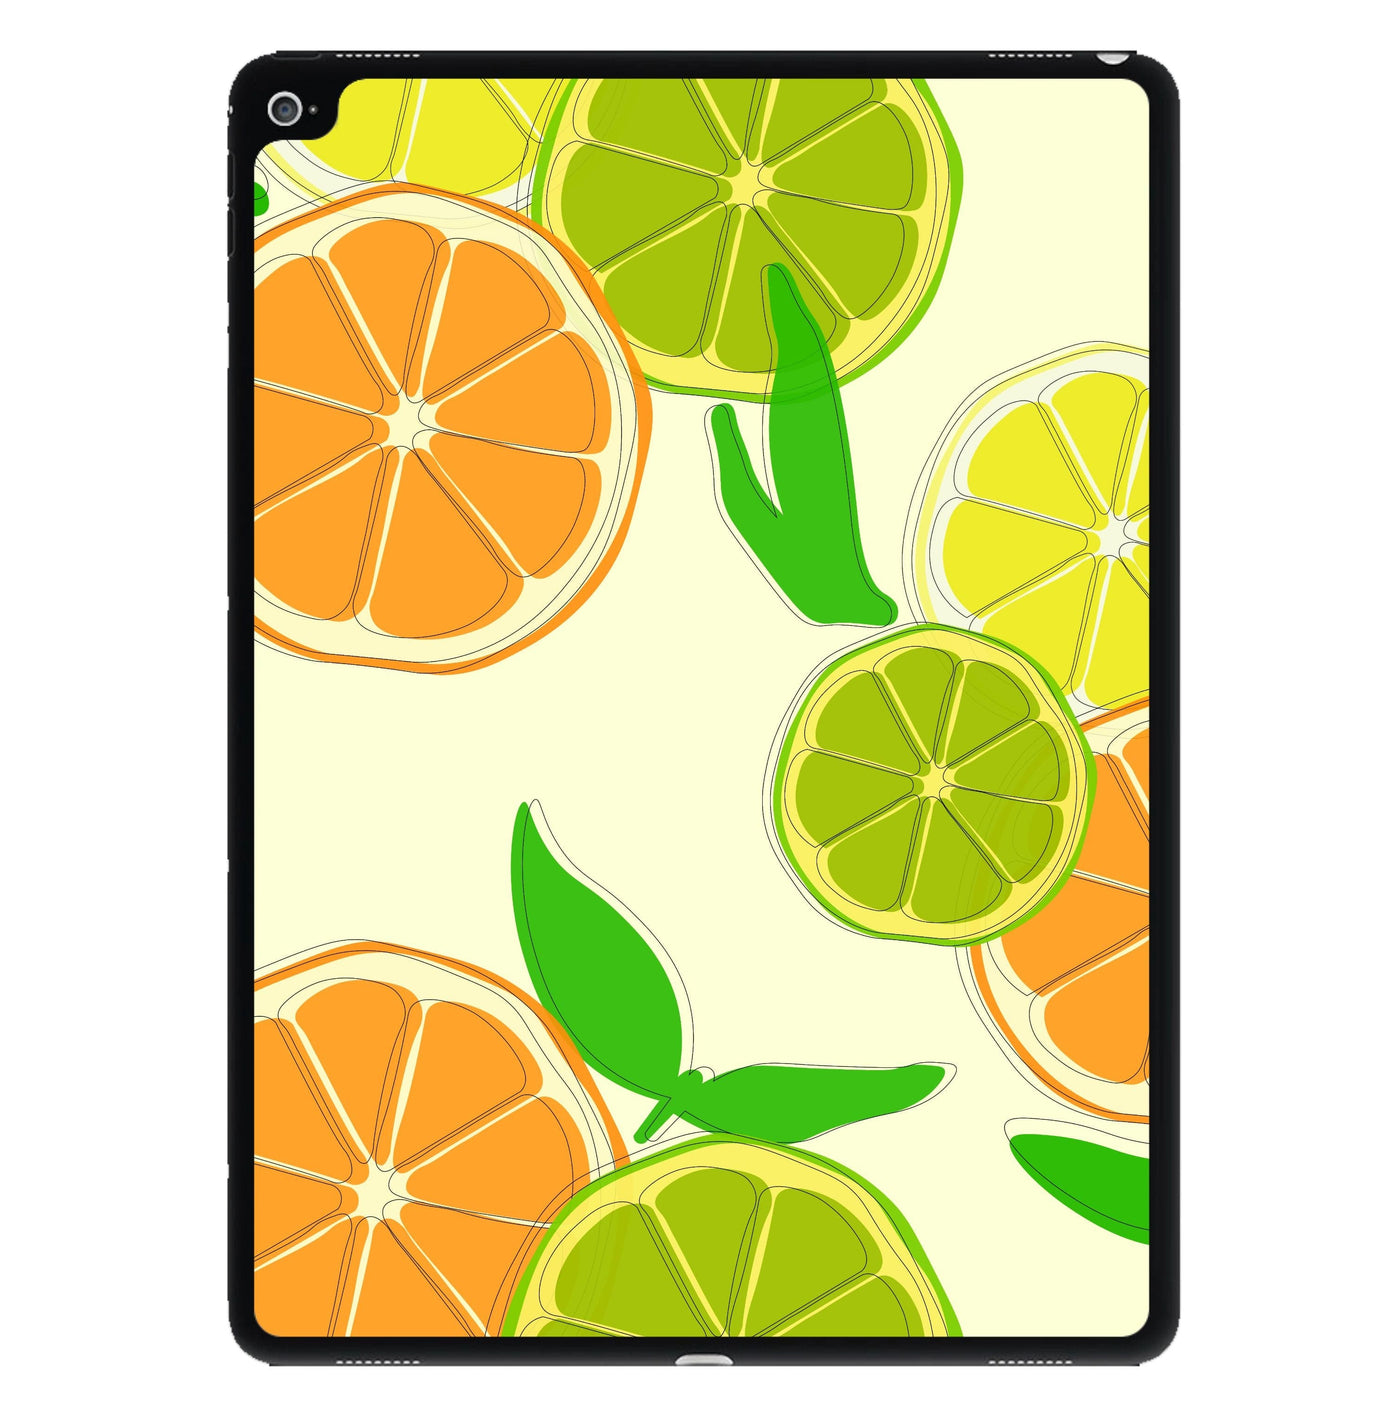 Oranges, Leomns And Limes - Fruit Patterns iPad Case